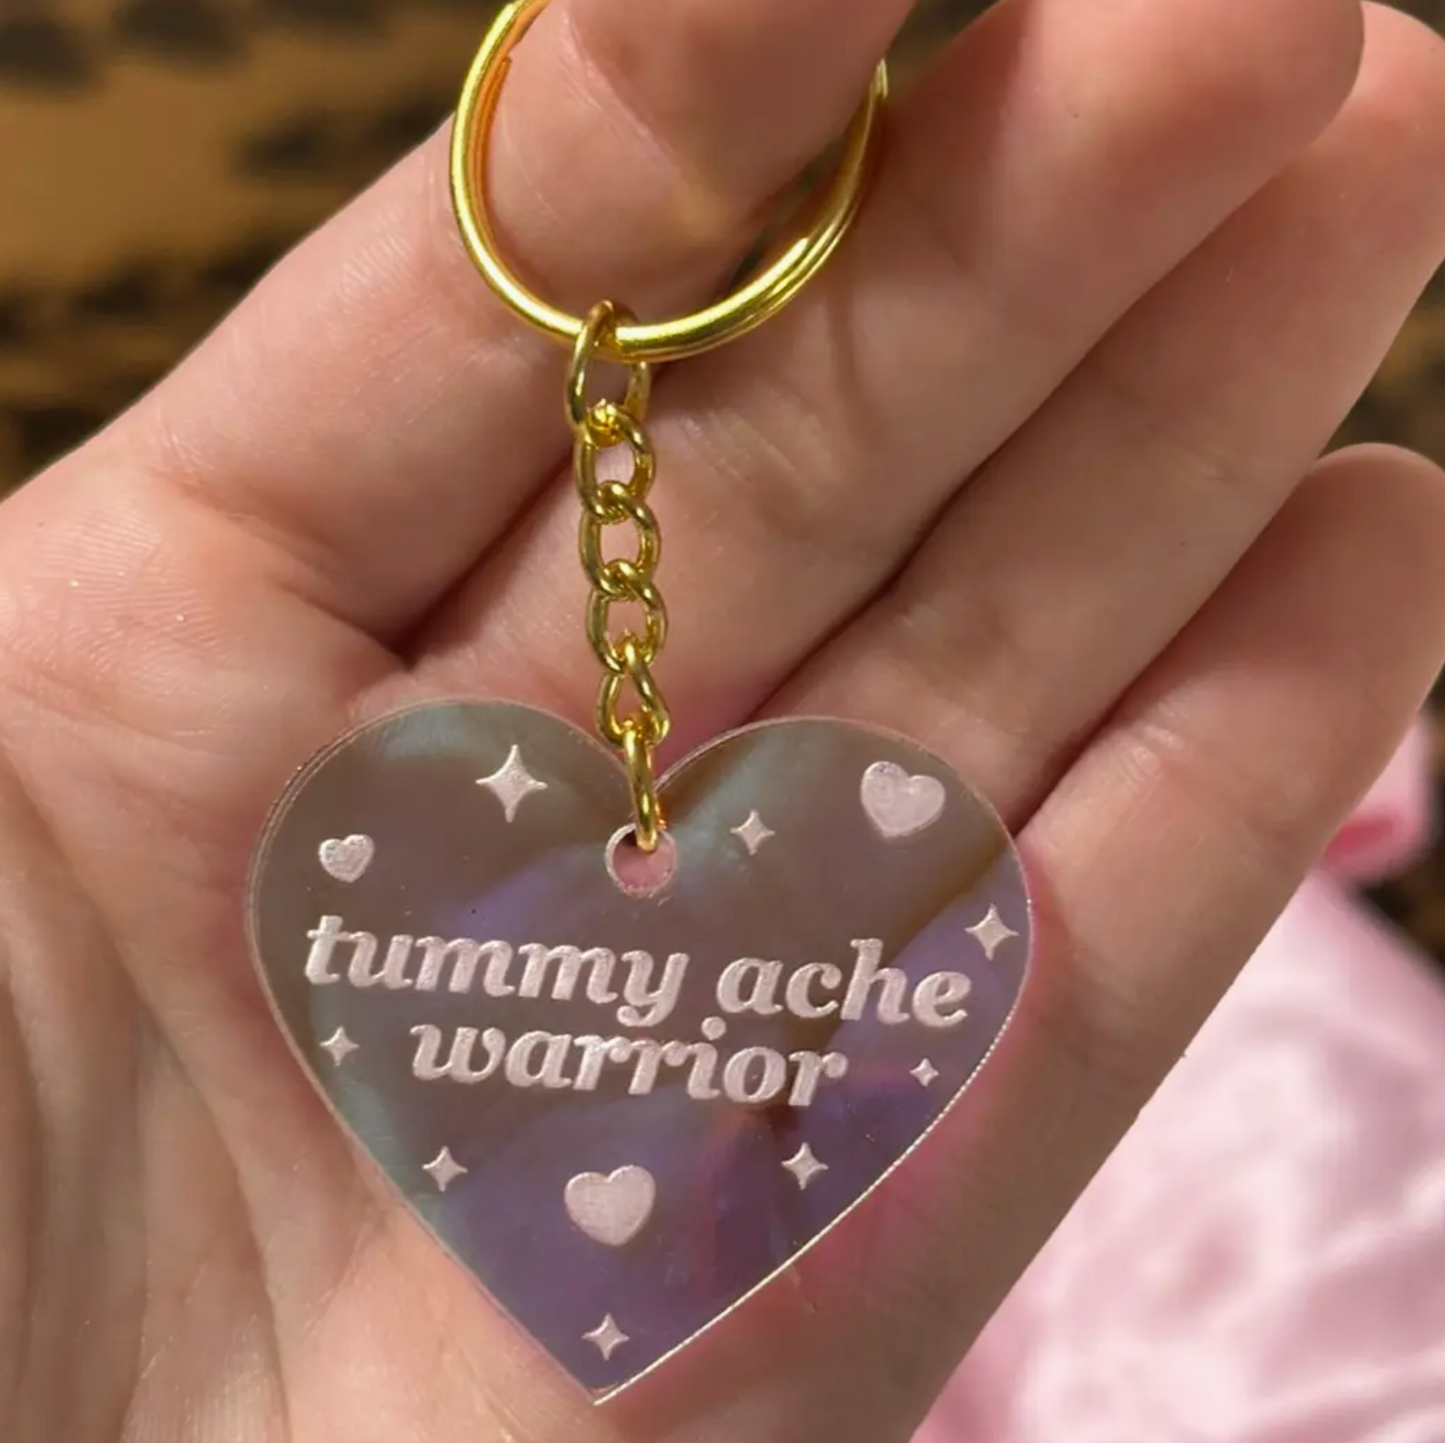 Tummy Ache Warrior Iridescent Acrylic Keychain